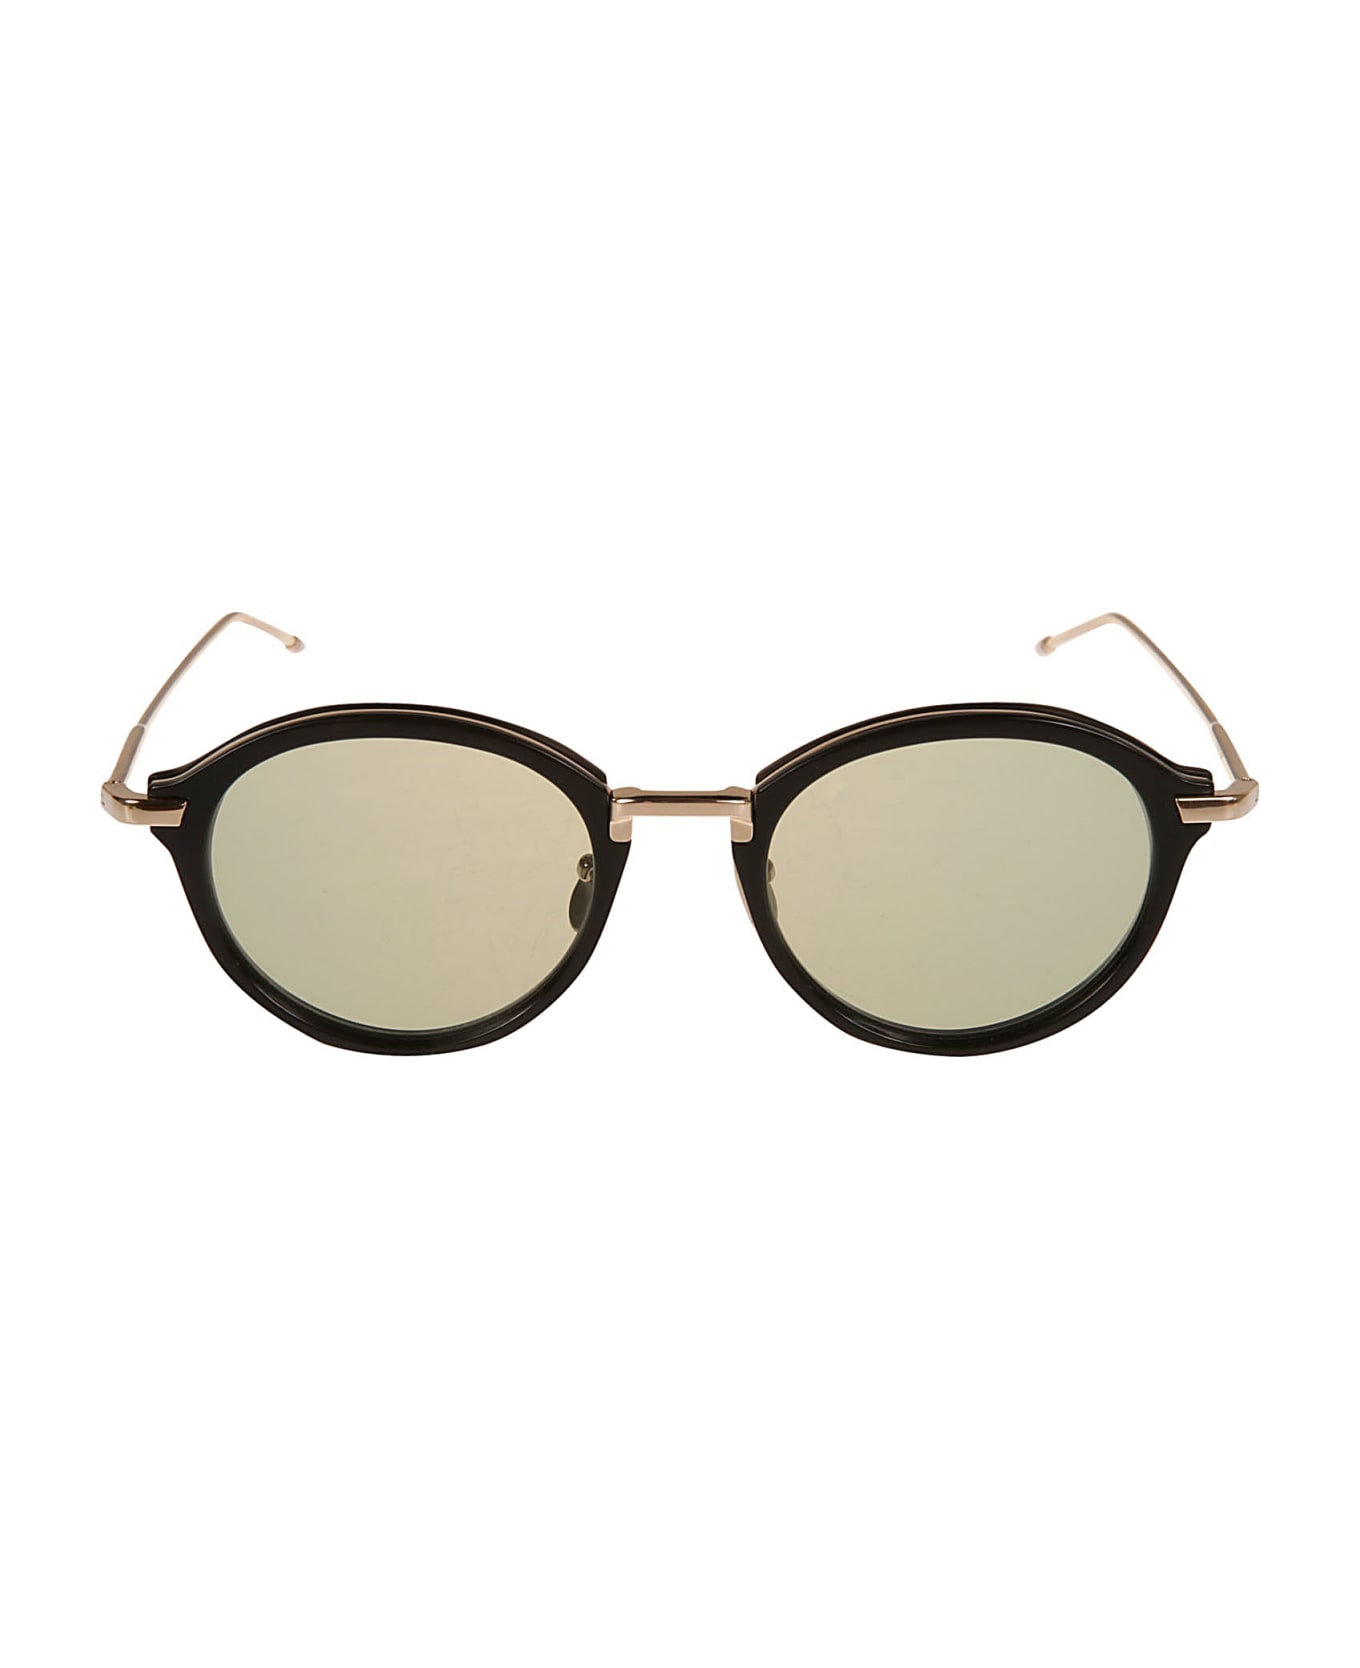 Thom Browne Classic Round Frame Sunglasses - Black